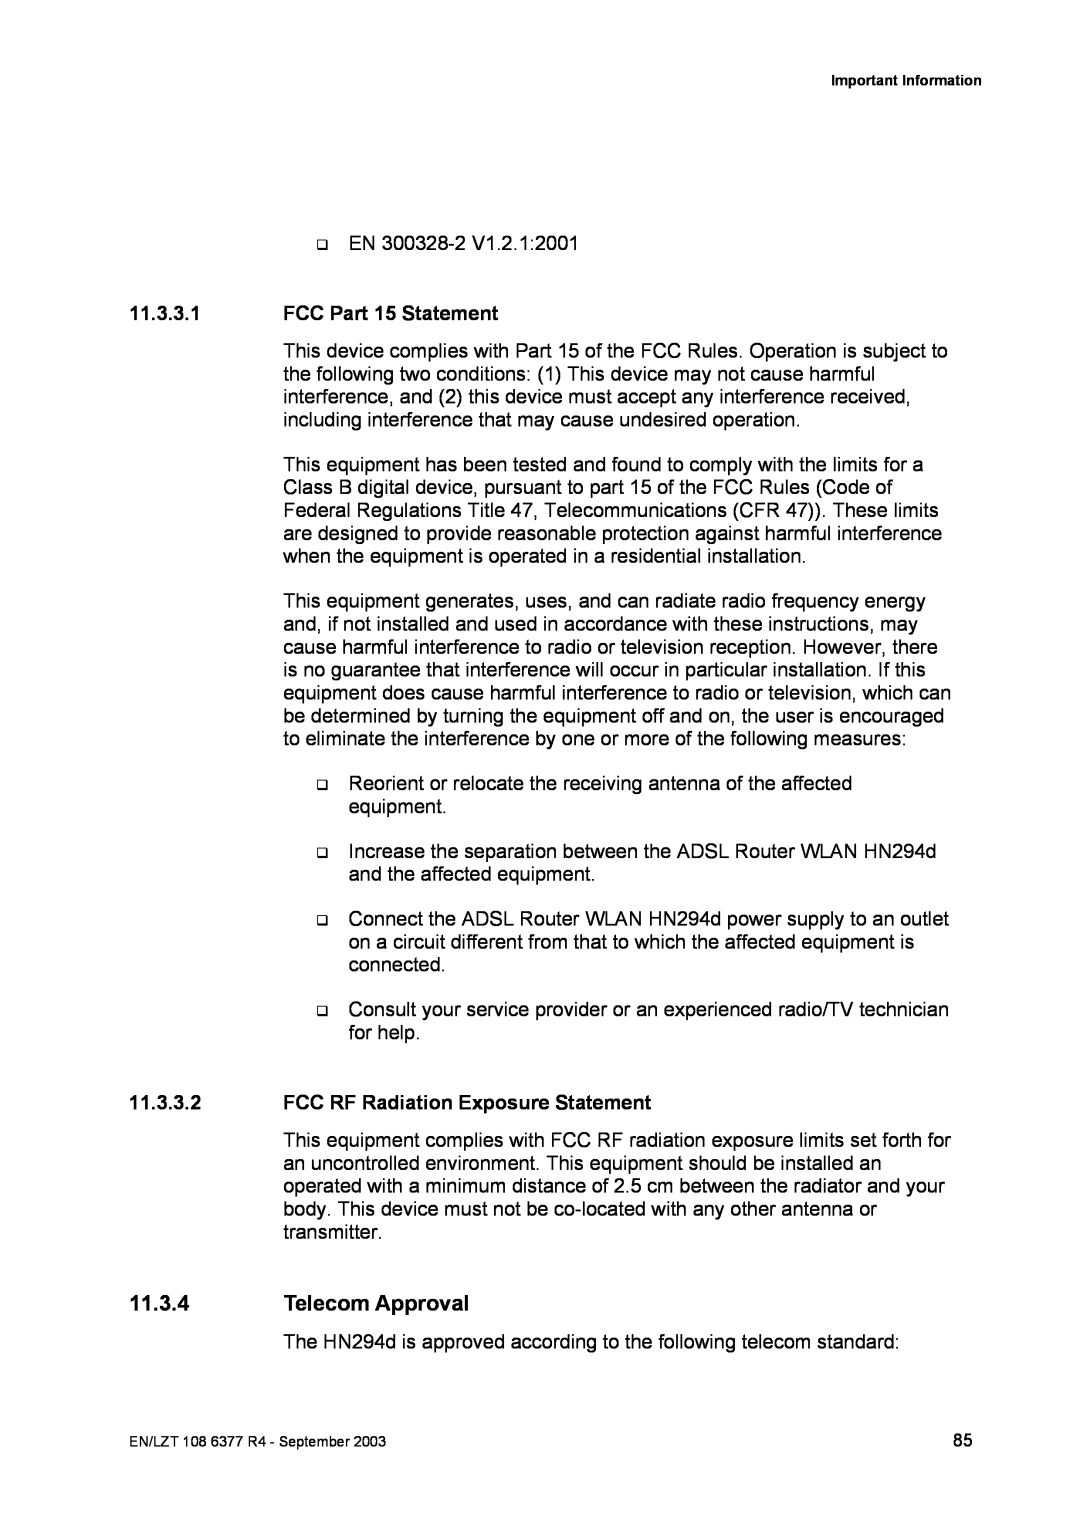 Garmin HN294DP/DI manual Telecom Approval, FCC Part 15 Statement, FCC RF Radiation Exposure Statement 